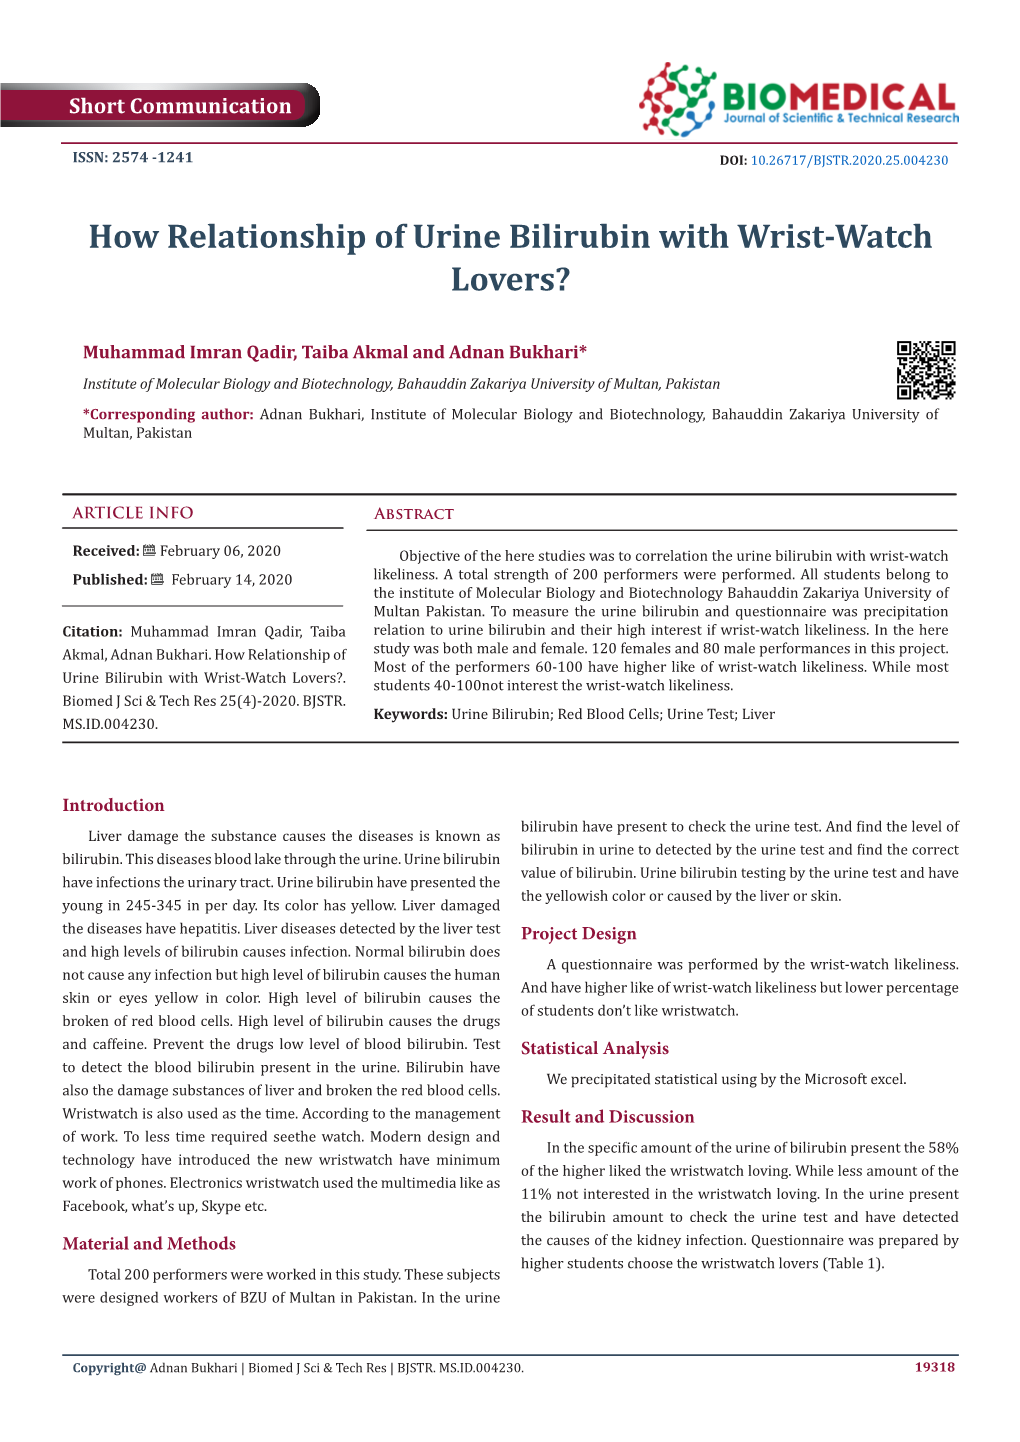 How Relationship of Urine Bilirubin with Wrist-Watch Lovers?